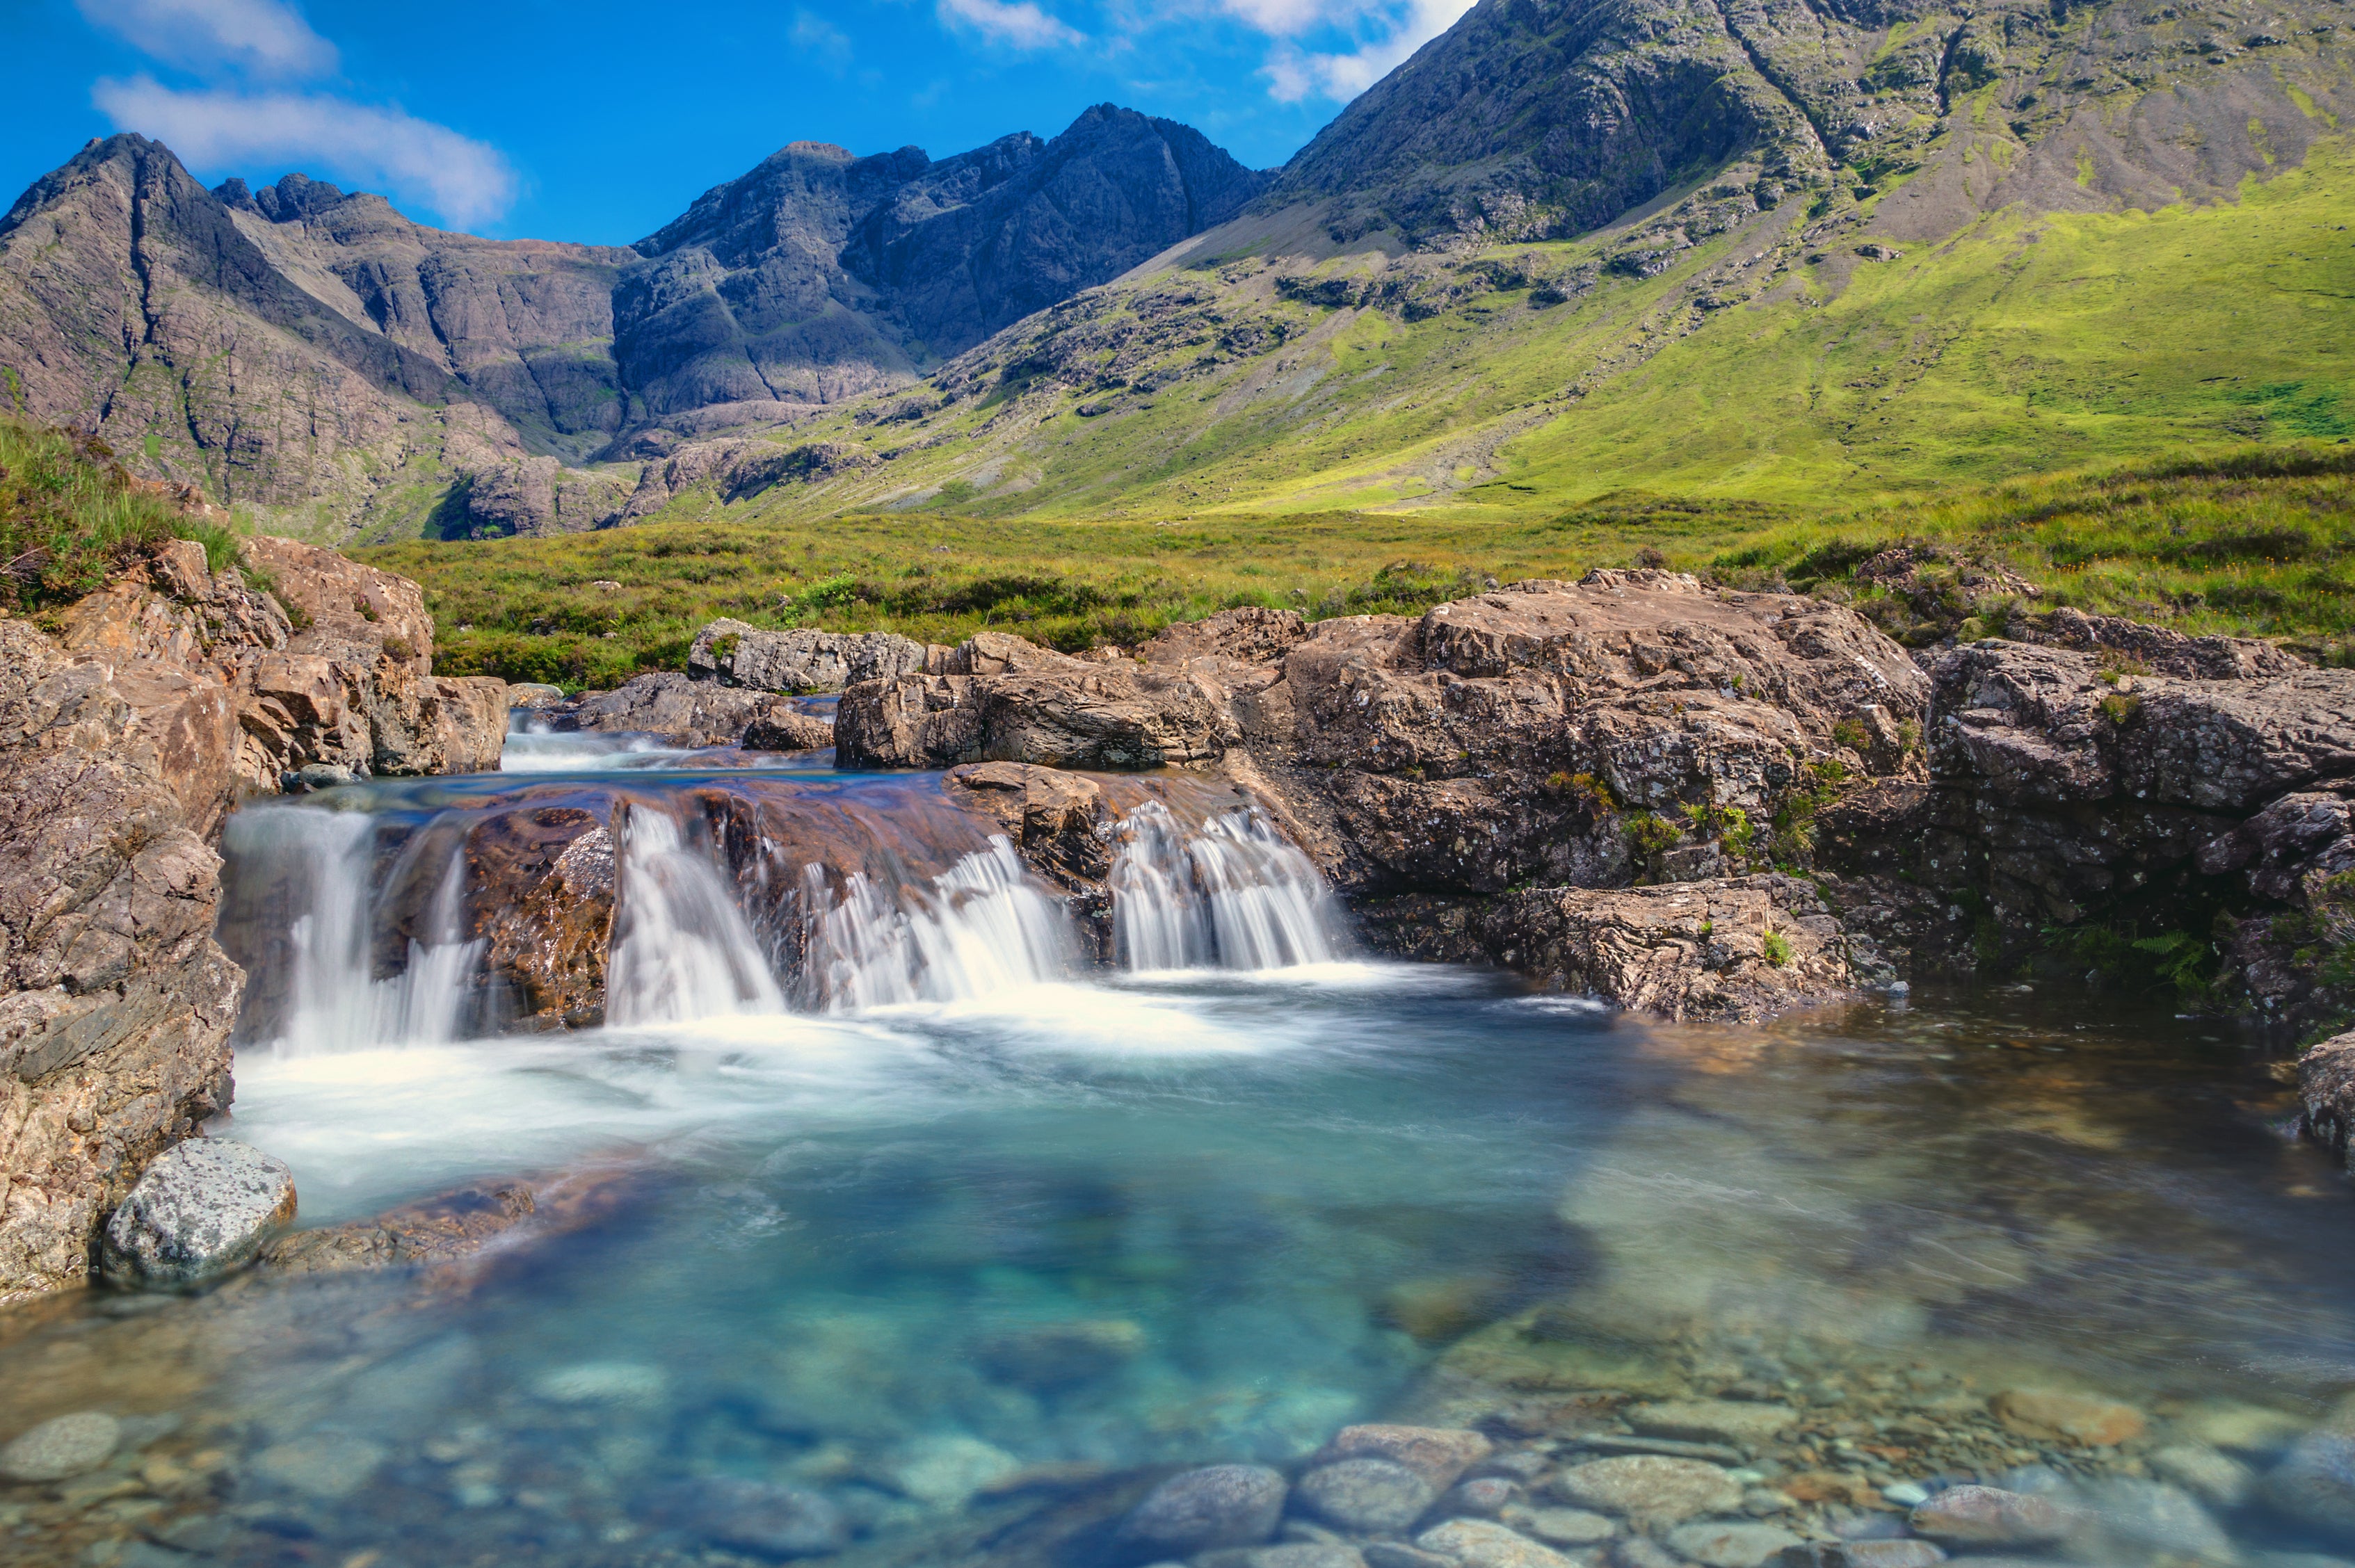 The Fairy Pools on the Isle of Skye, found off Scotland’s northwest coast